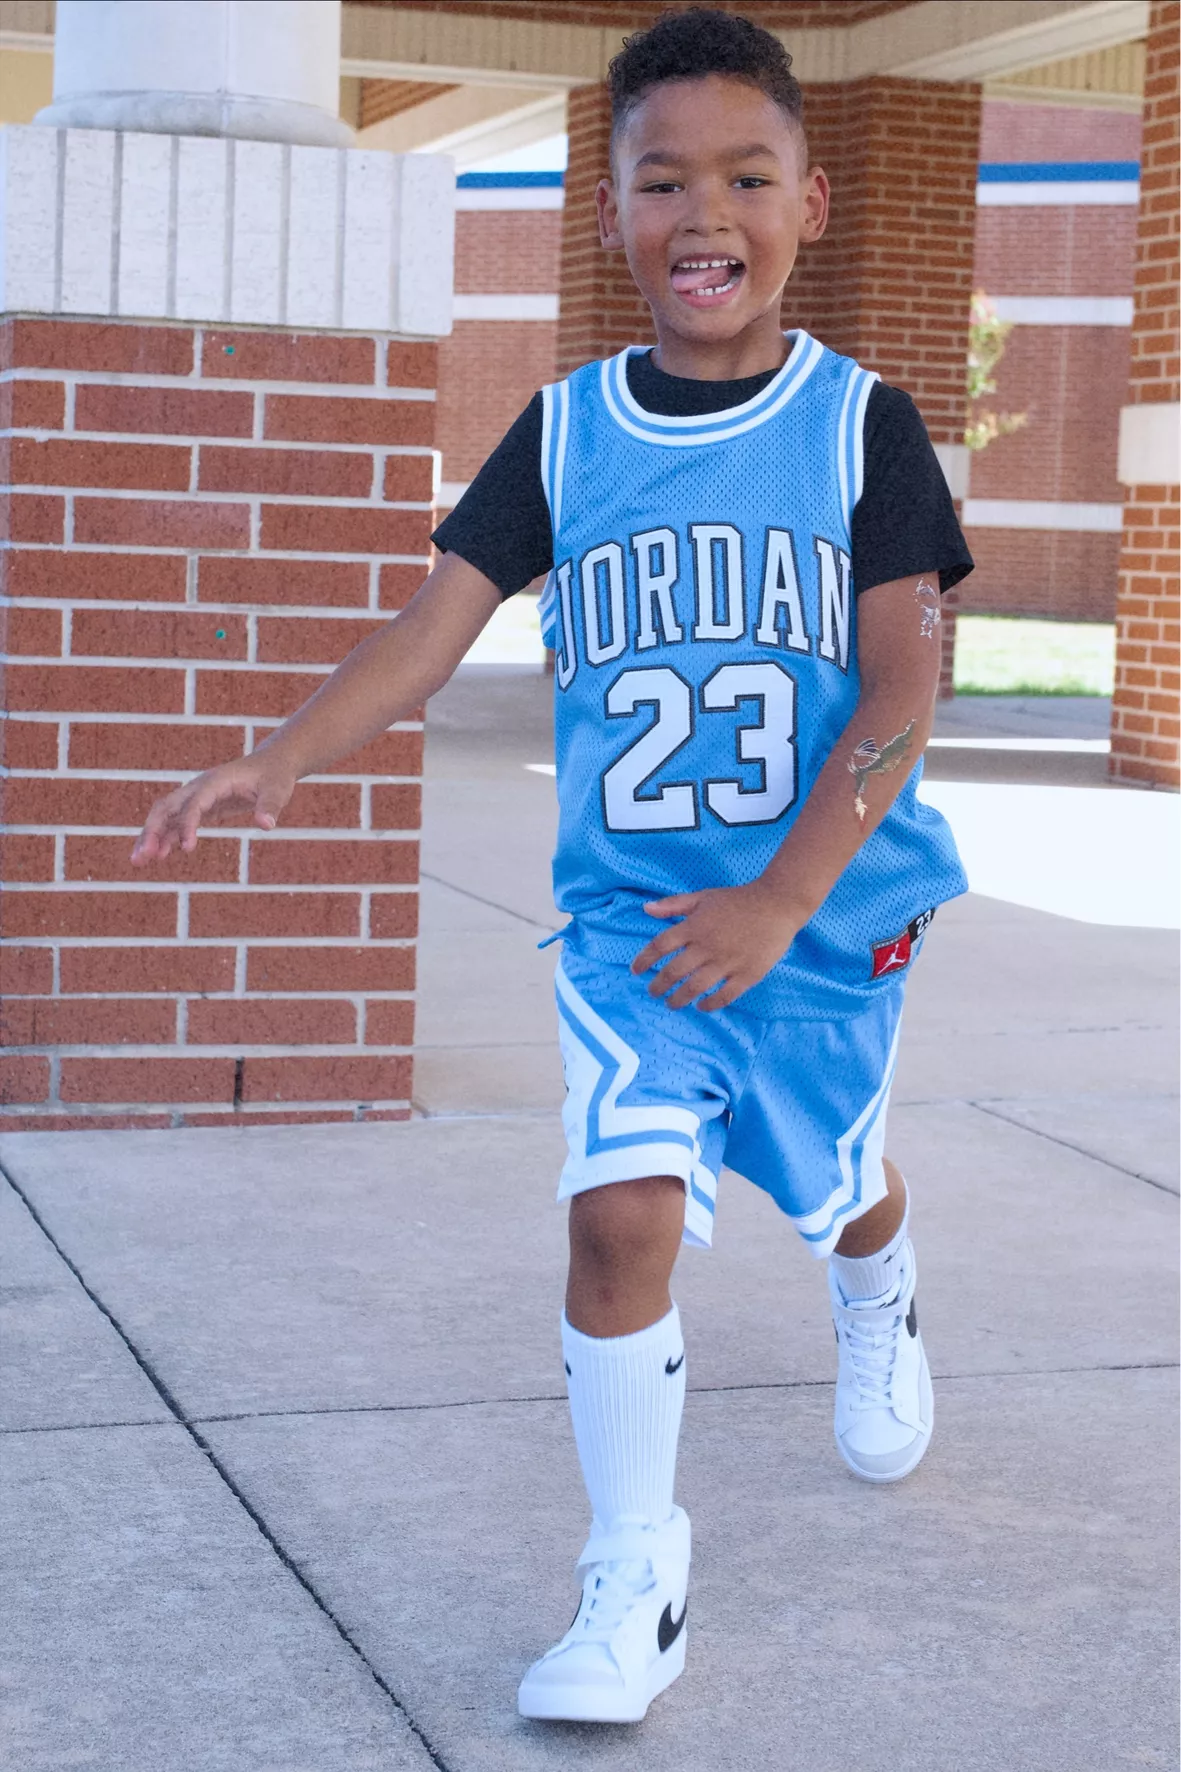 Jordan Kids' 23 Jersey